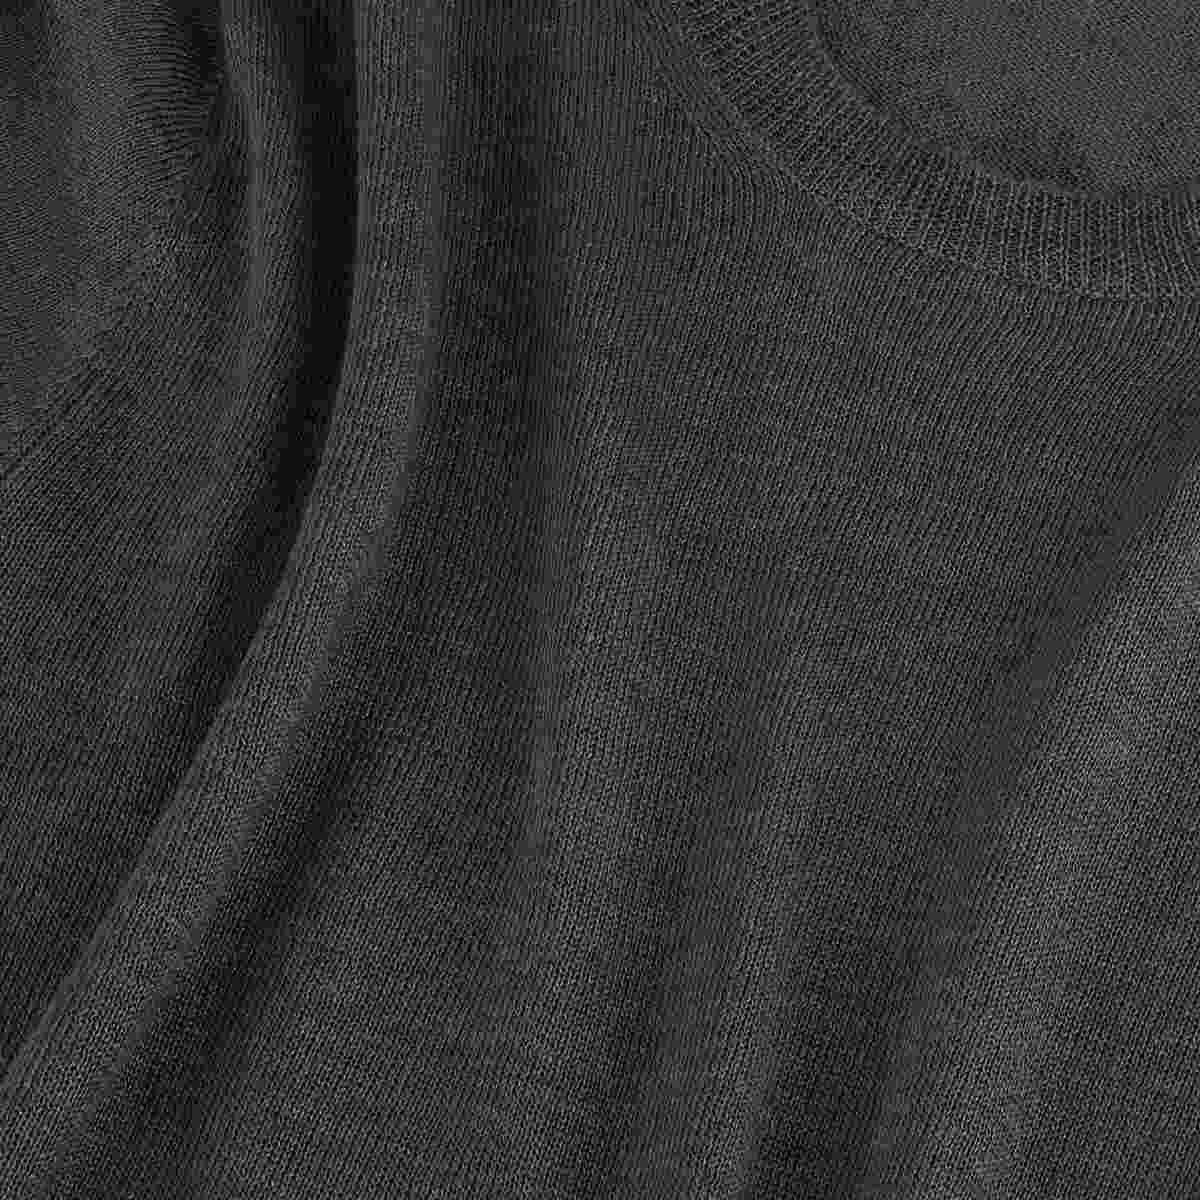 Linen tshirt for man dark grey color details view 100% Capri